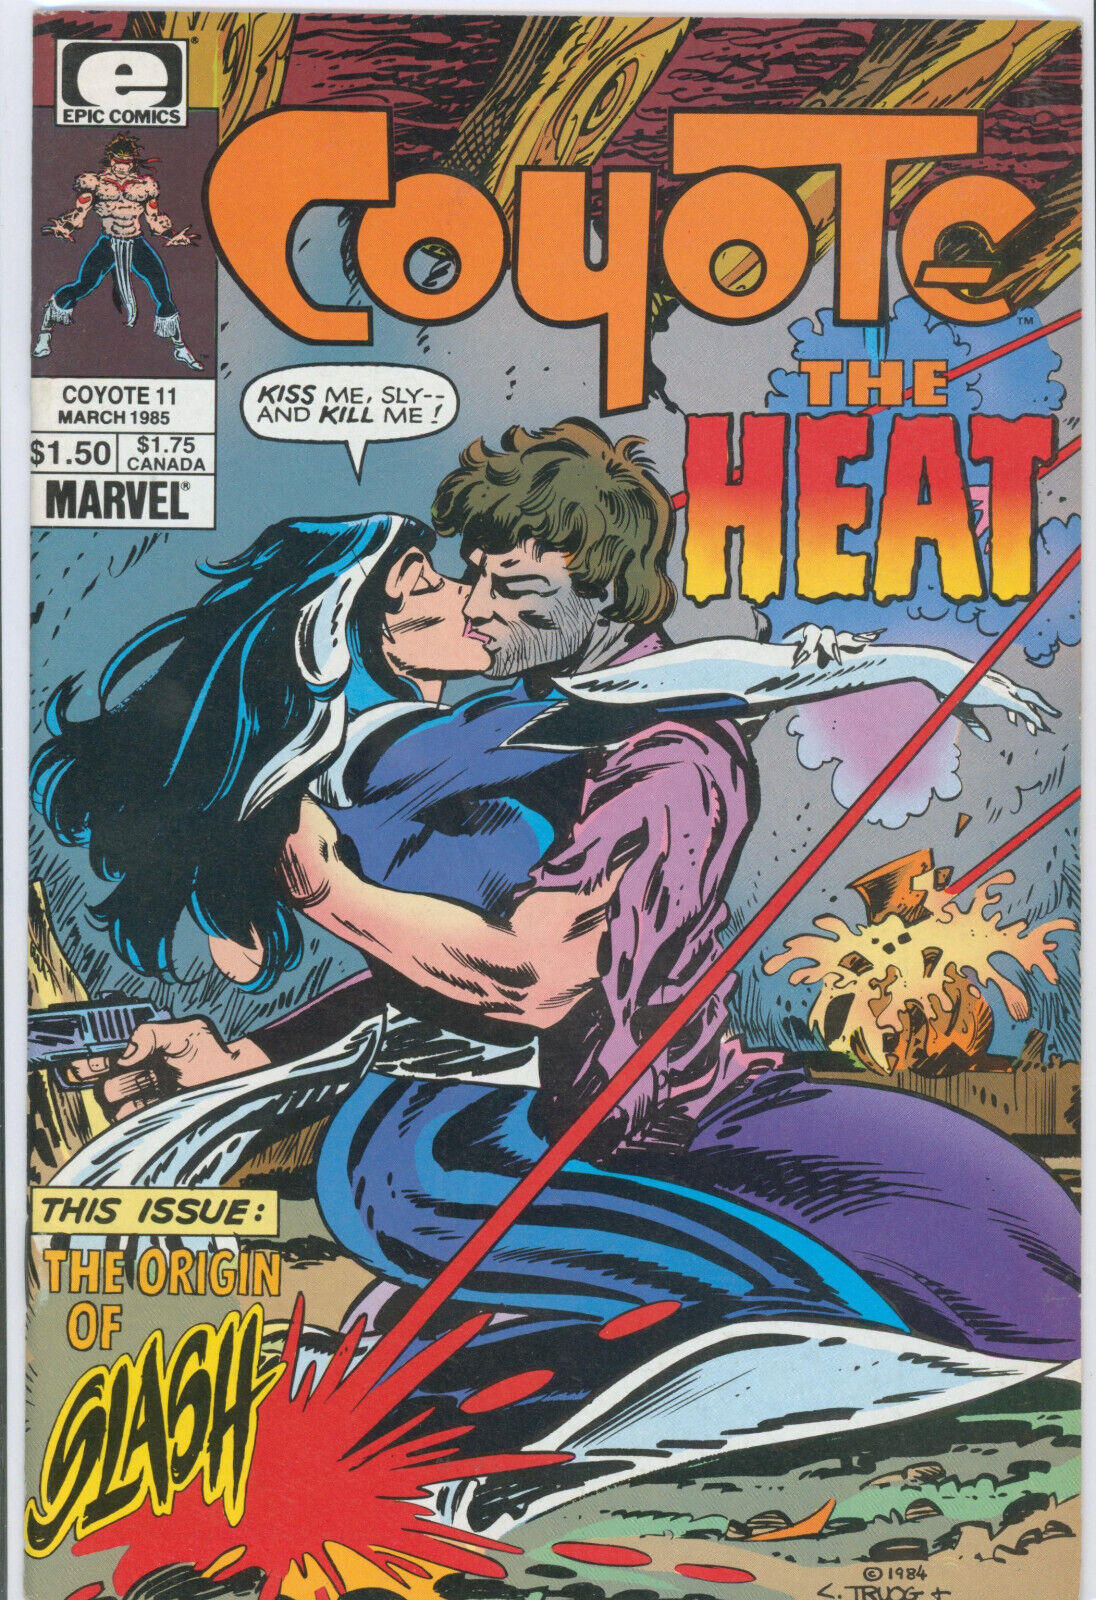 Coyote #11 1st Todd McFarlane Art In Comics Marvel / Epic 1985